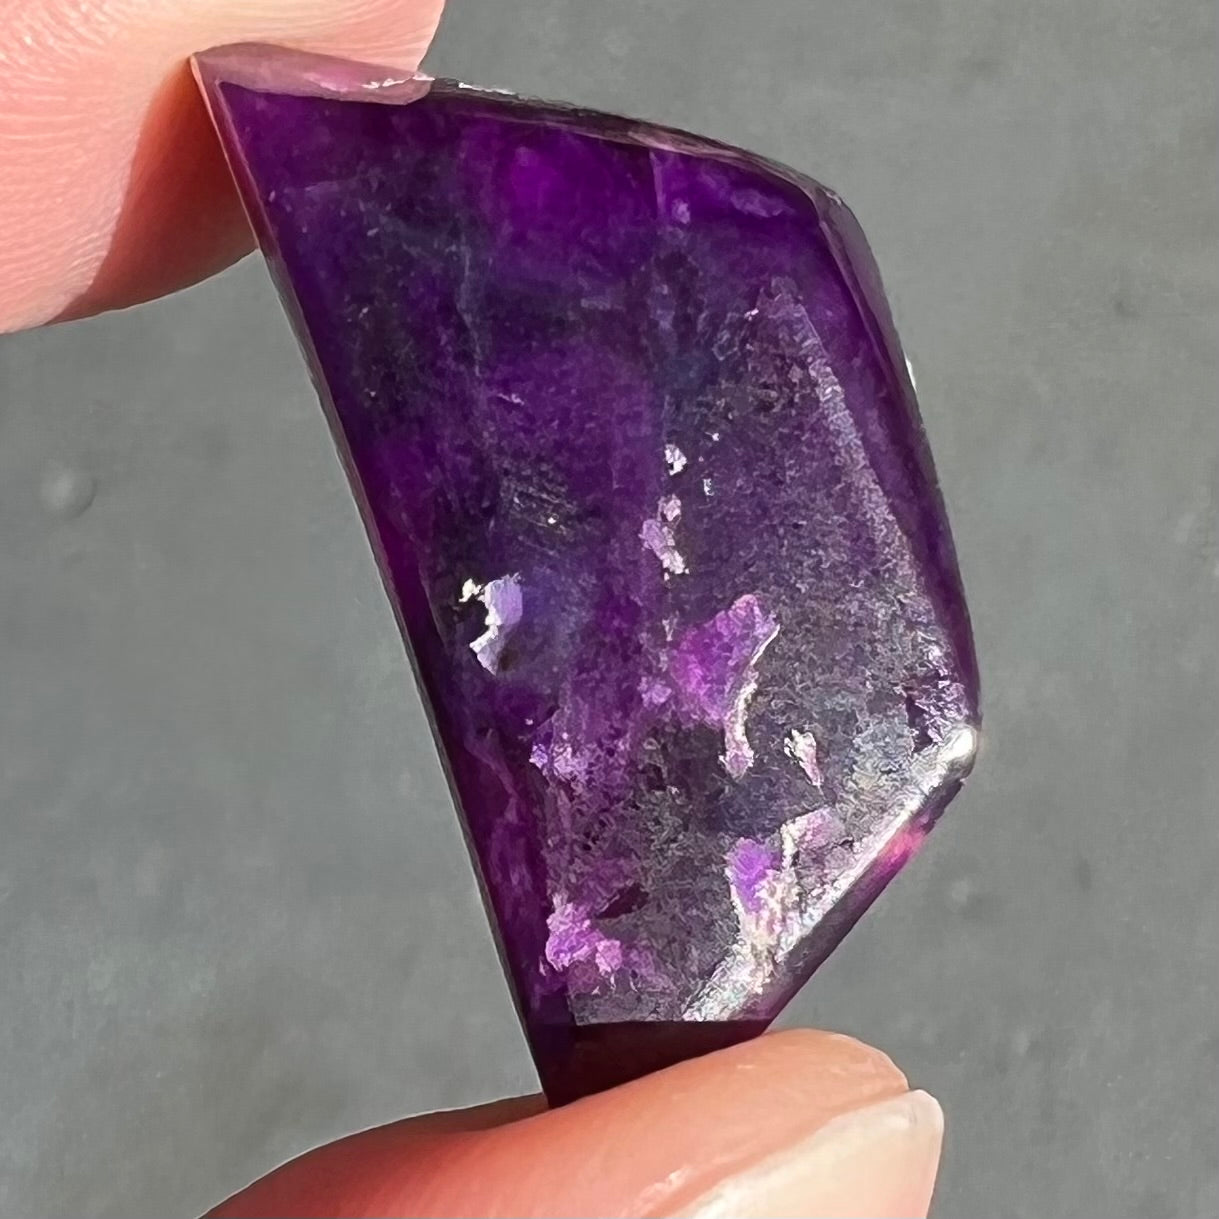 A freeform cabochon cut piece of dark purple sugilite.